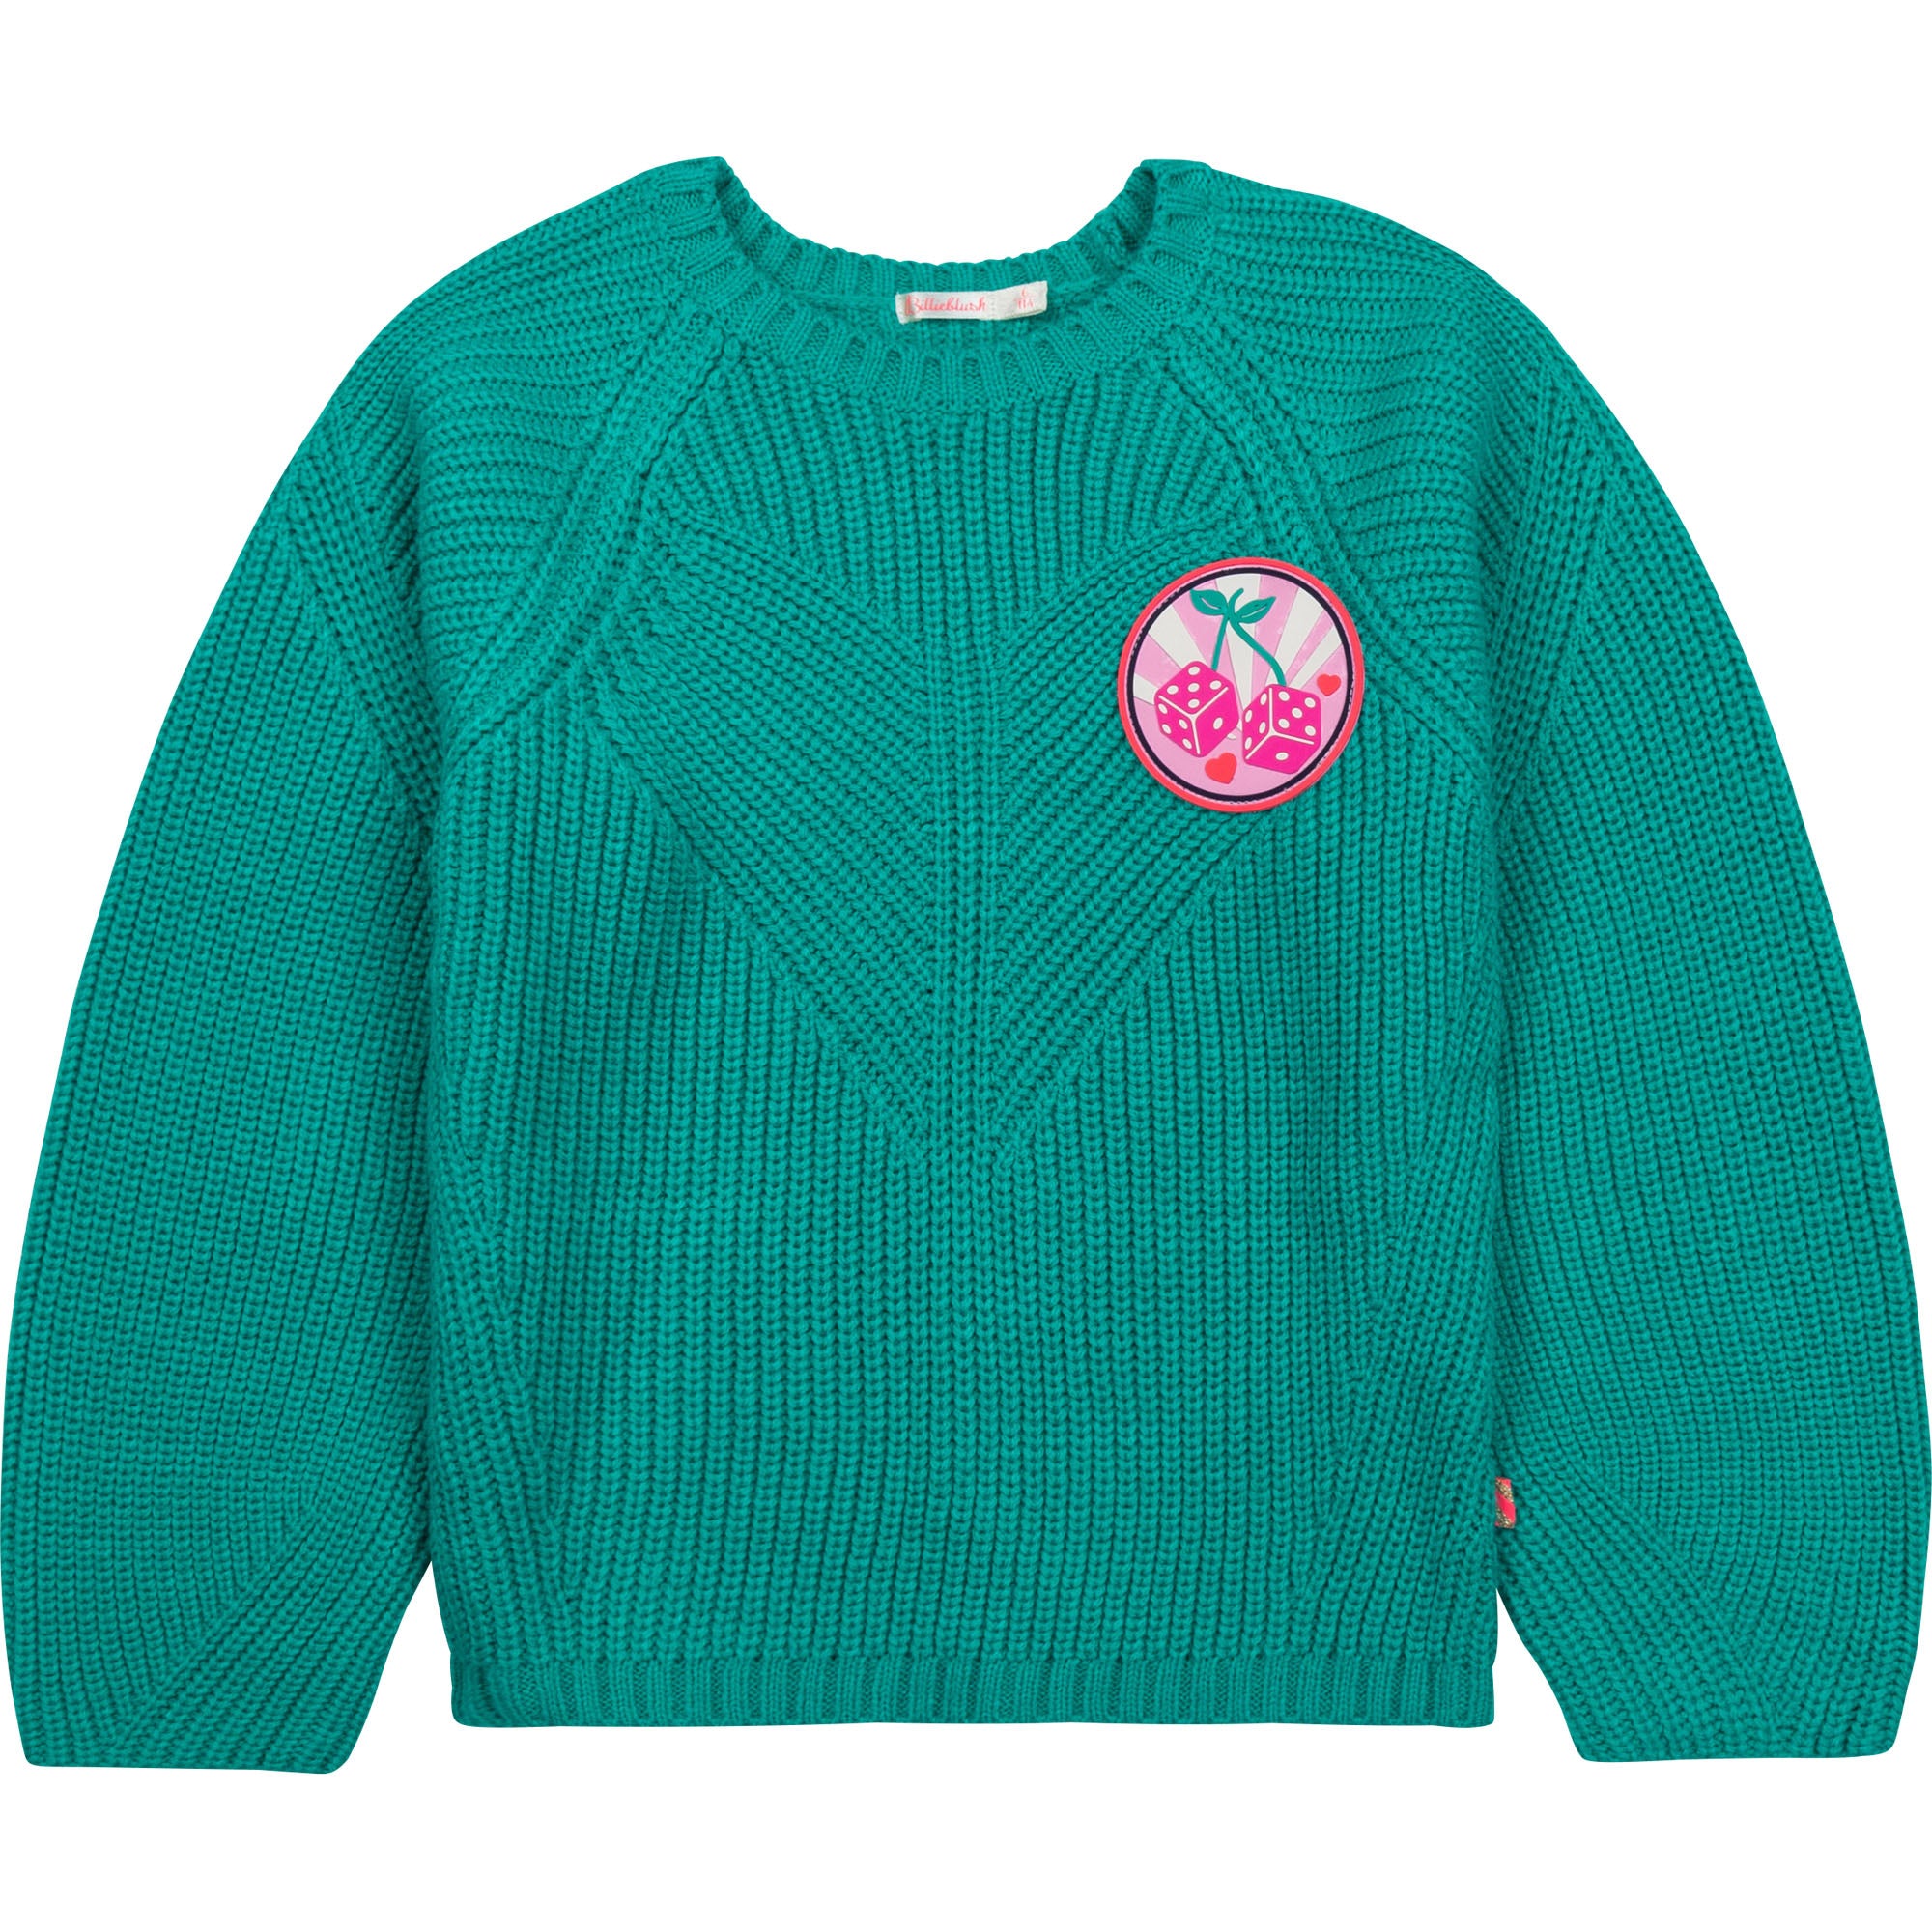 Girls Green Knit Sweater